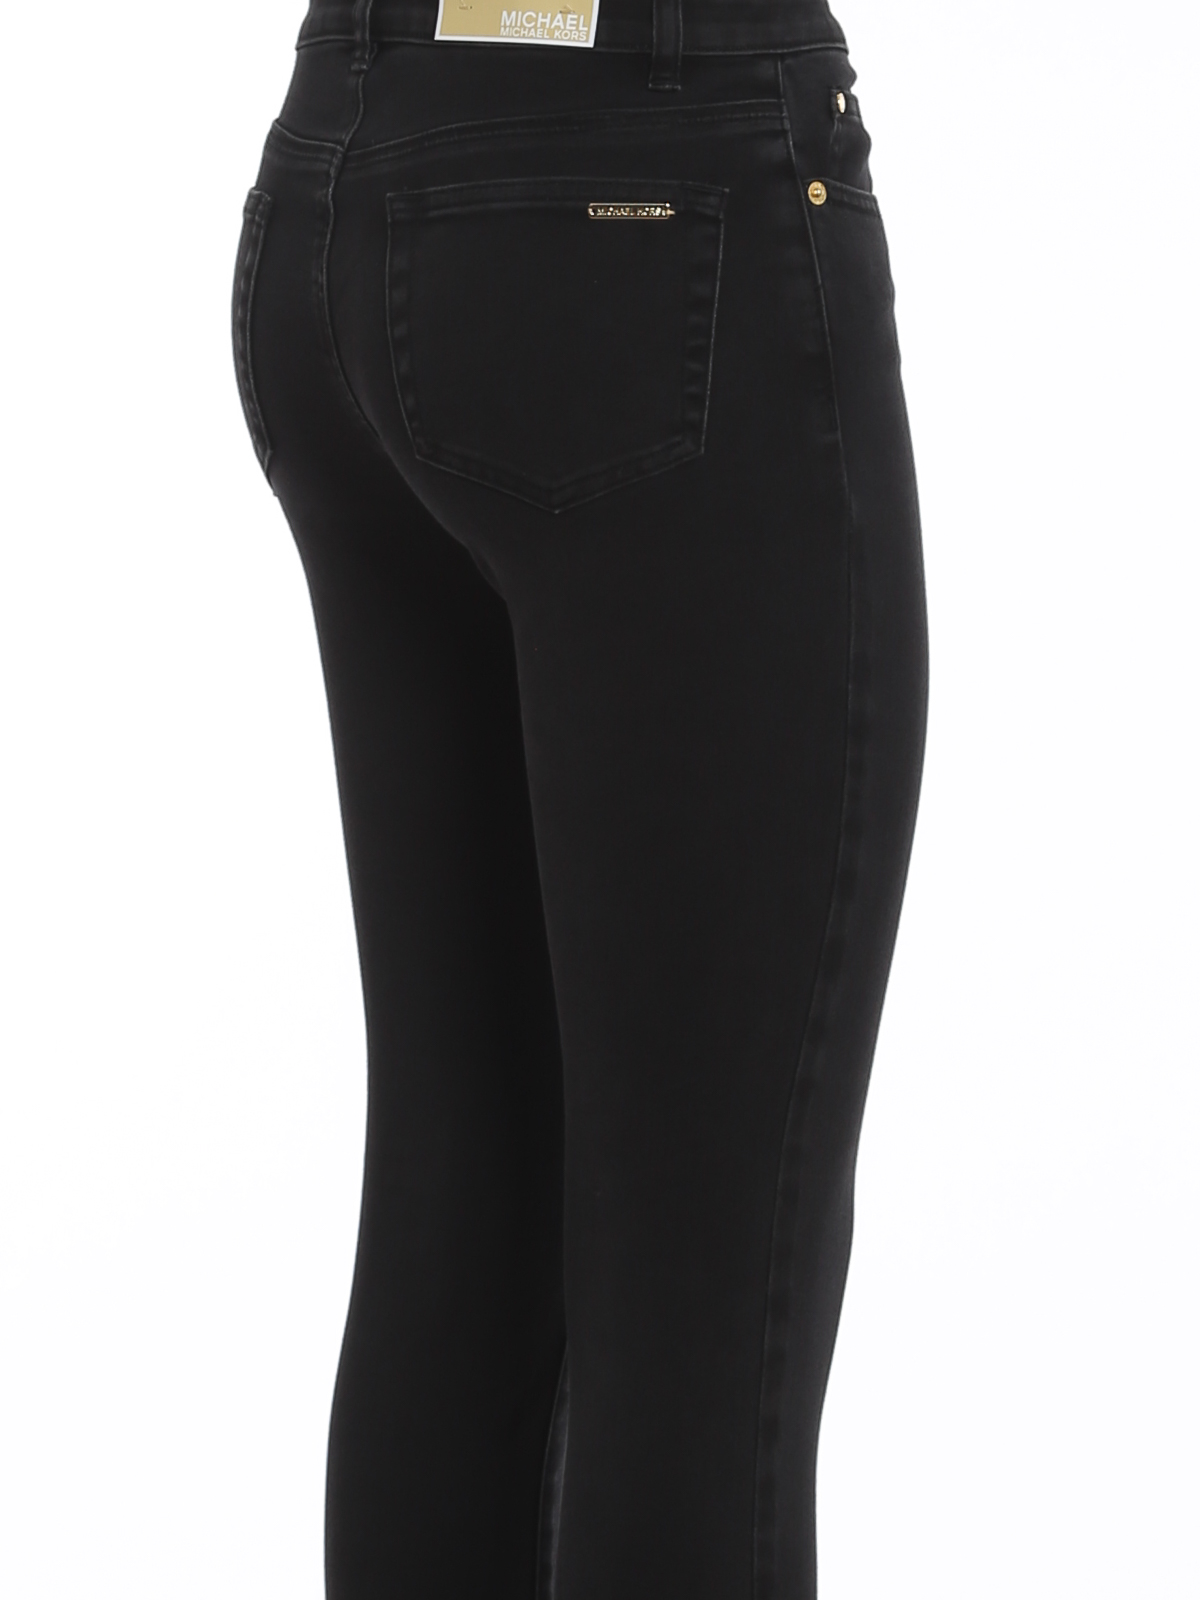 Shop Michael Kors Selma Jeans In Black